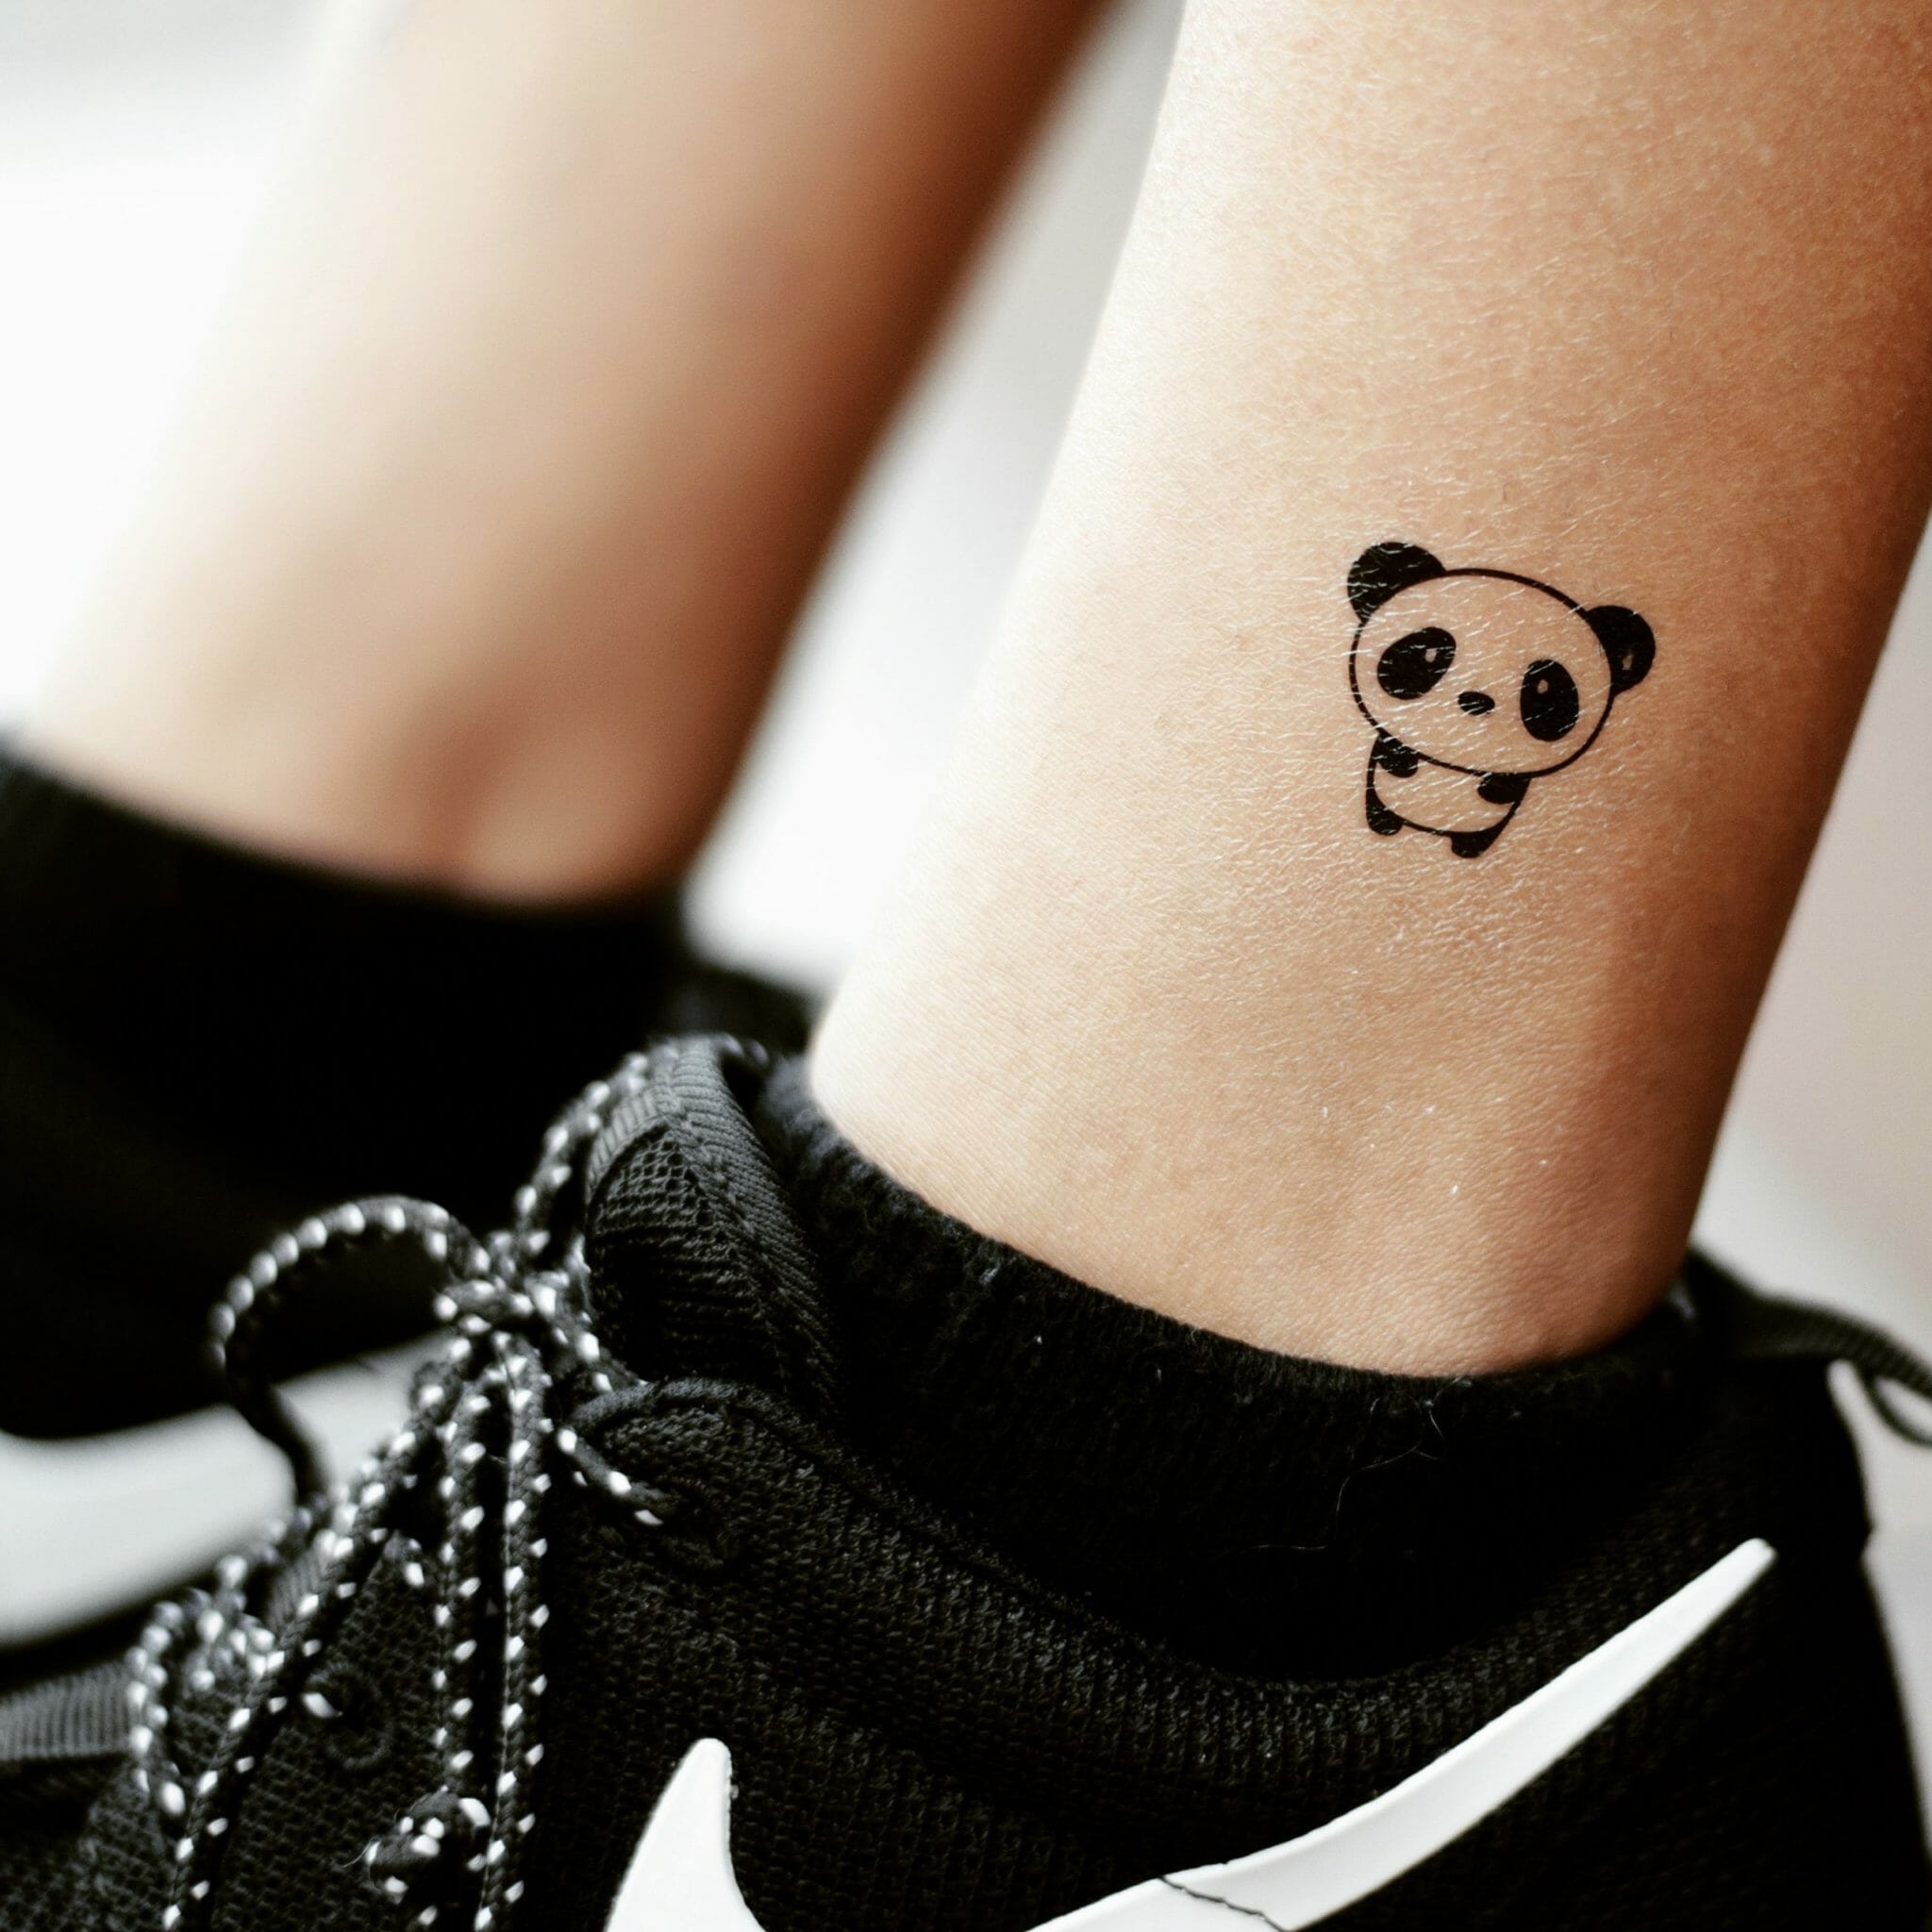 101 Amazing Panda Tattoo Ideas You Need To See! 